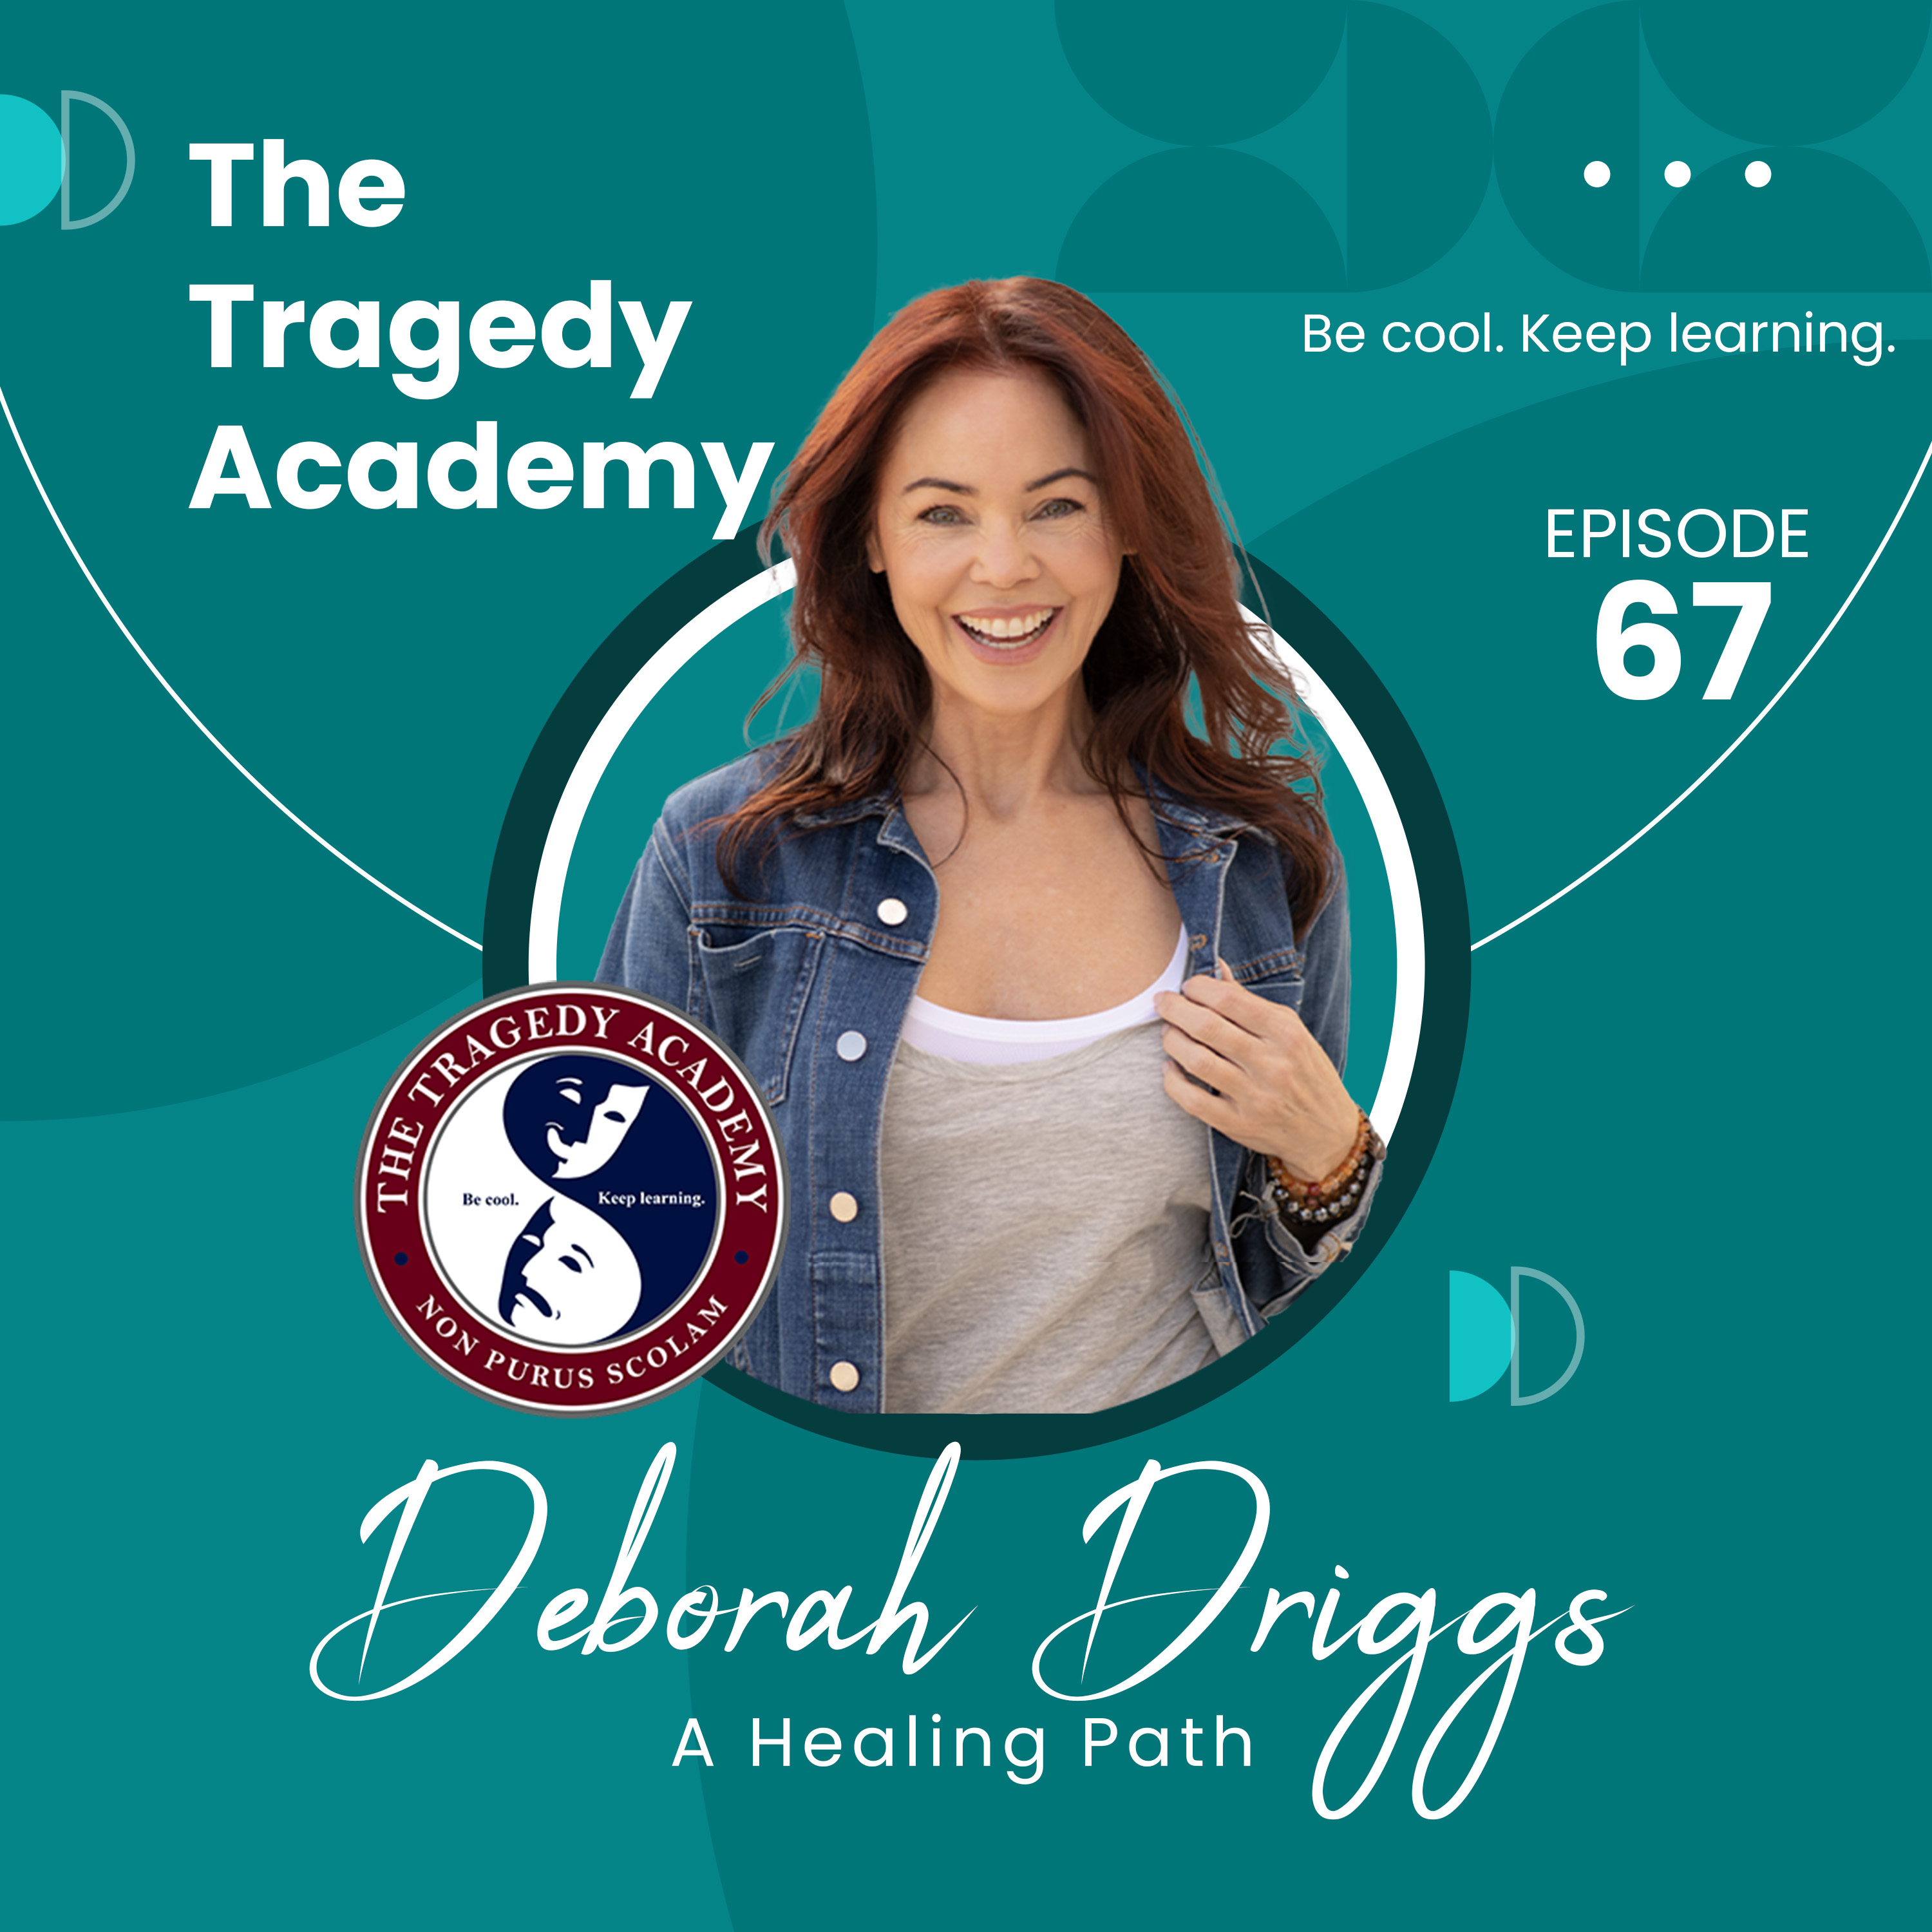 Deborah Driggs - A Healing Path